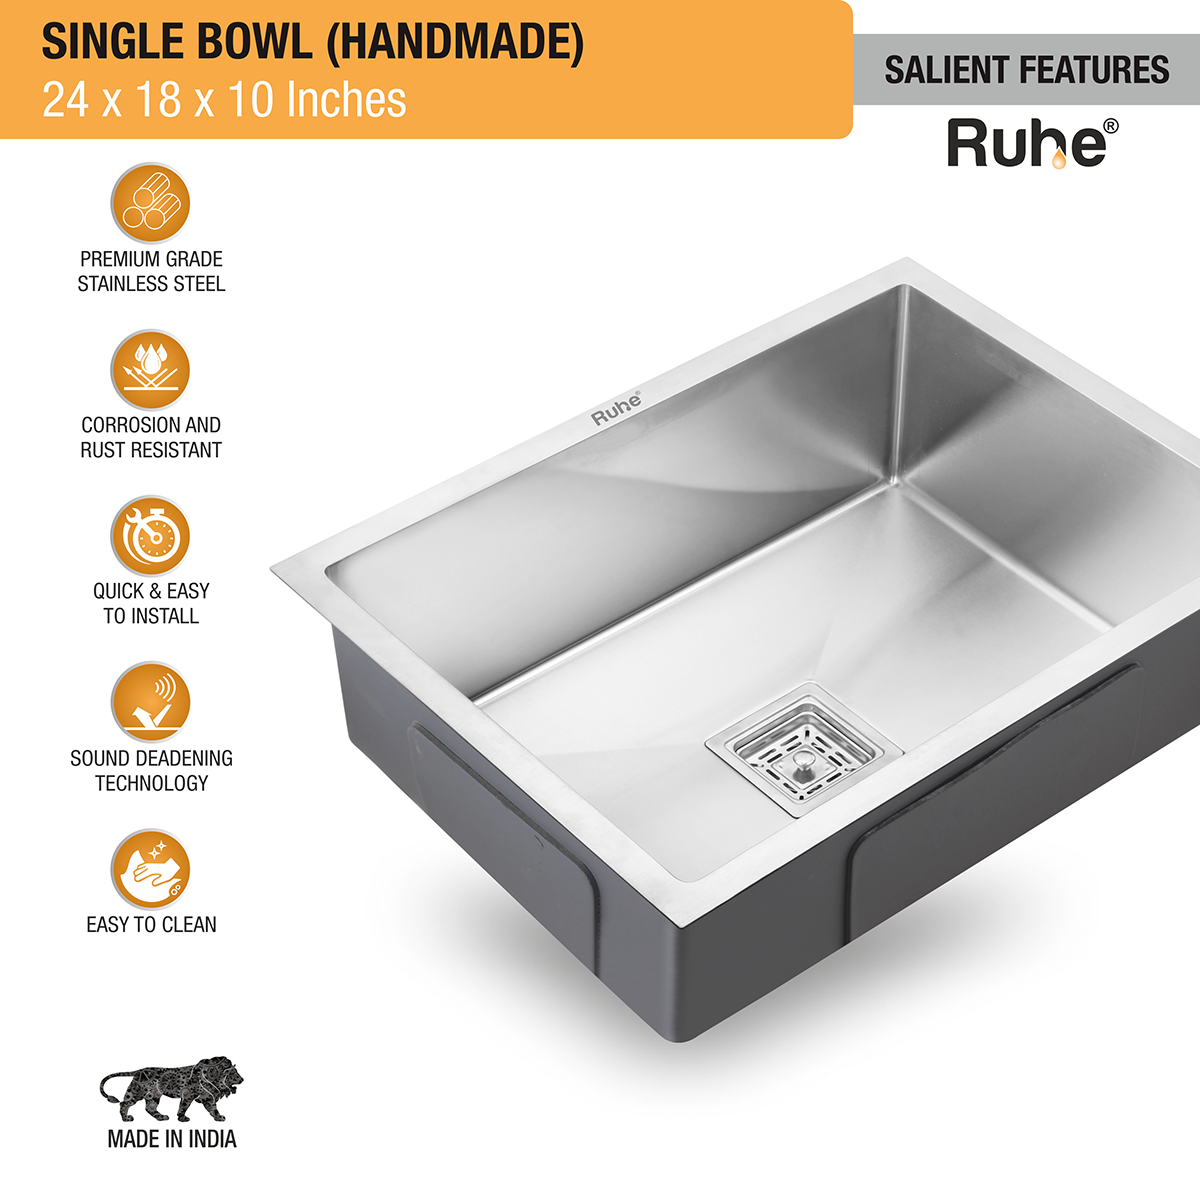 Handmade Single Bowl Premium Kitchen Sink (24 x 18 x 10 Inches) features